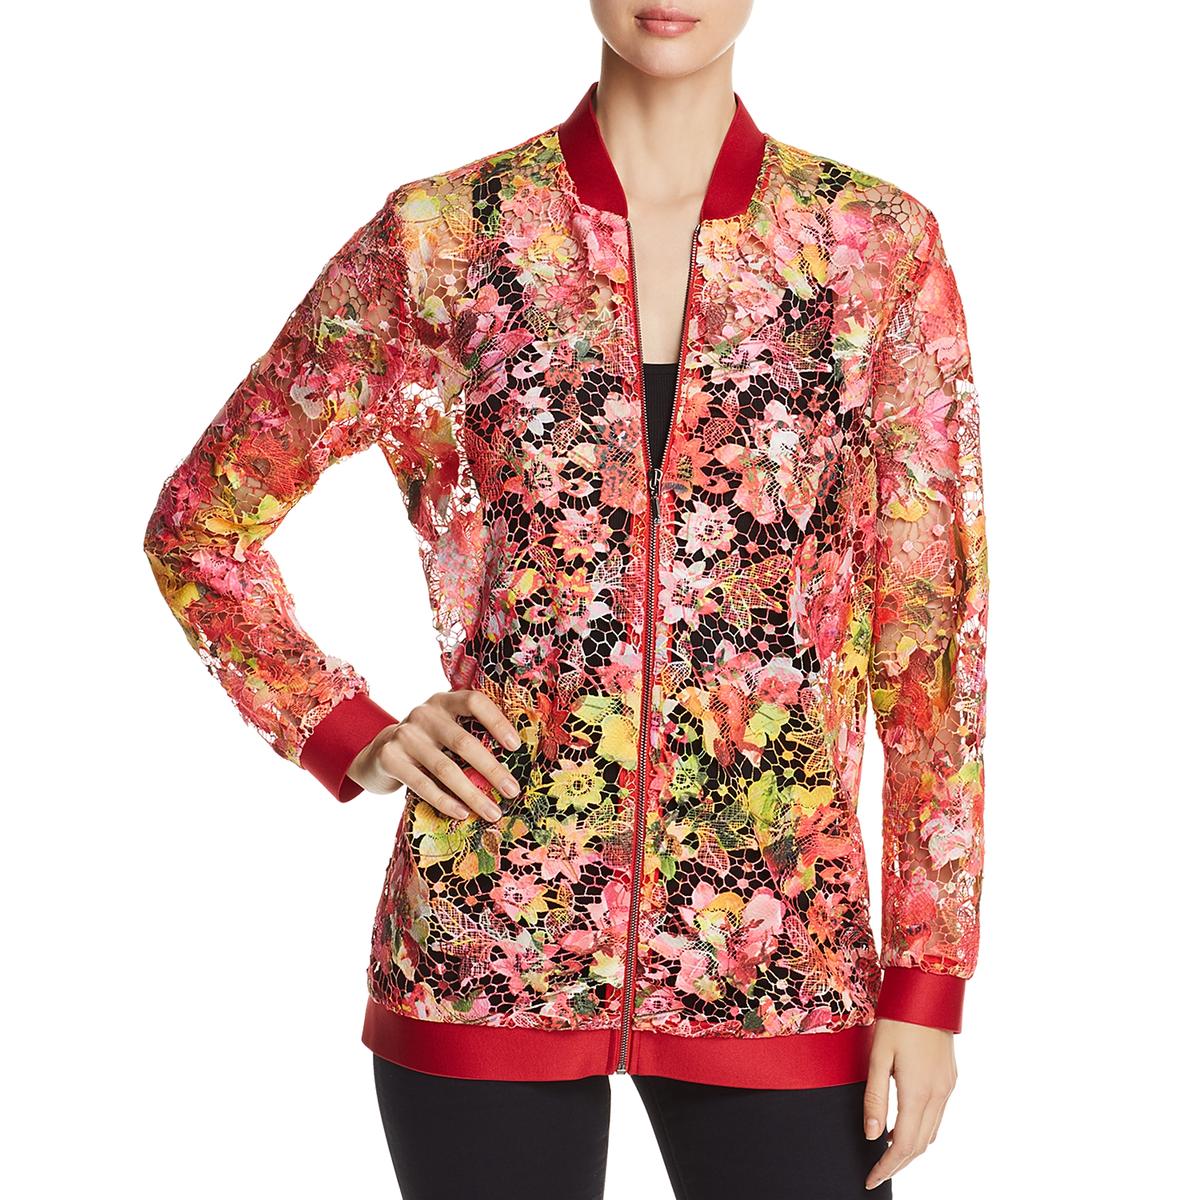 T Tahari Womens Gale Orange Lace Floral Print Sheer Jacket L BHFO 3077